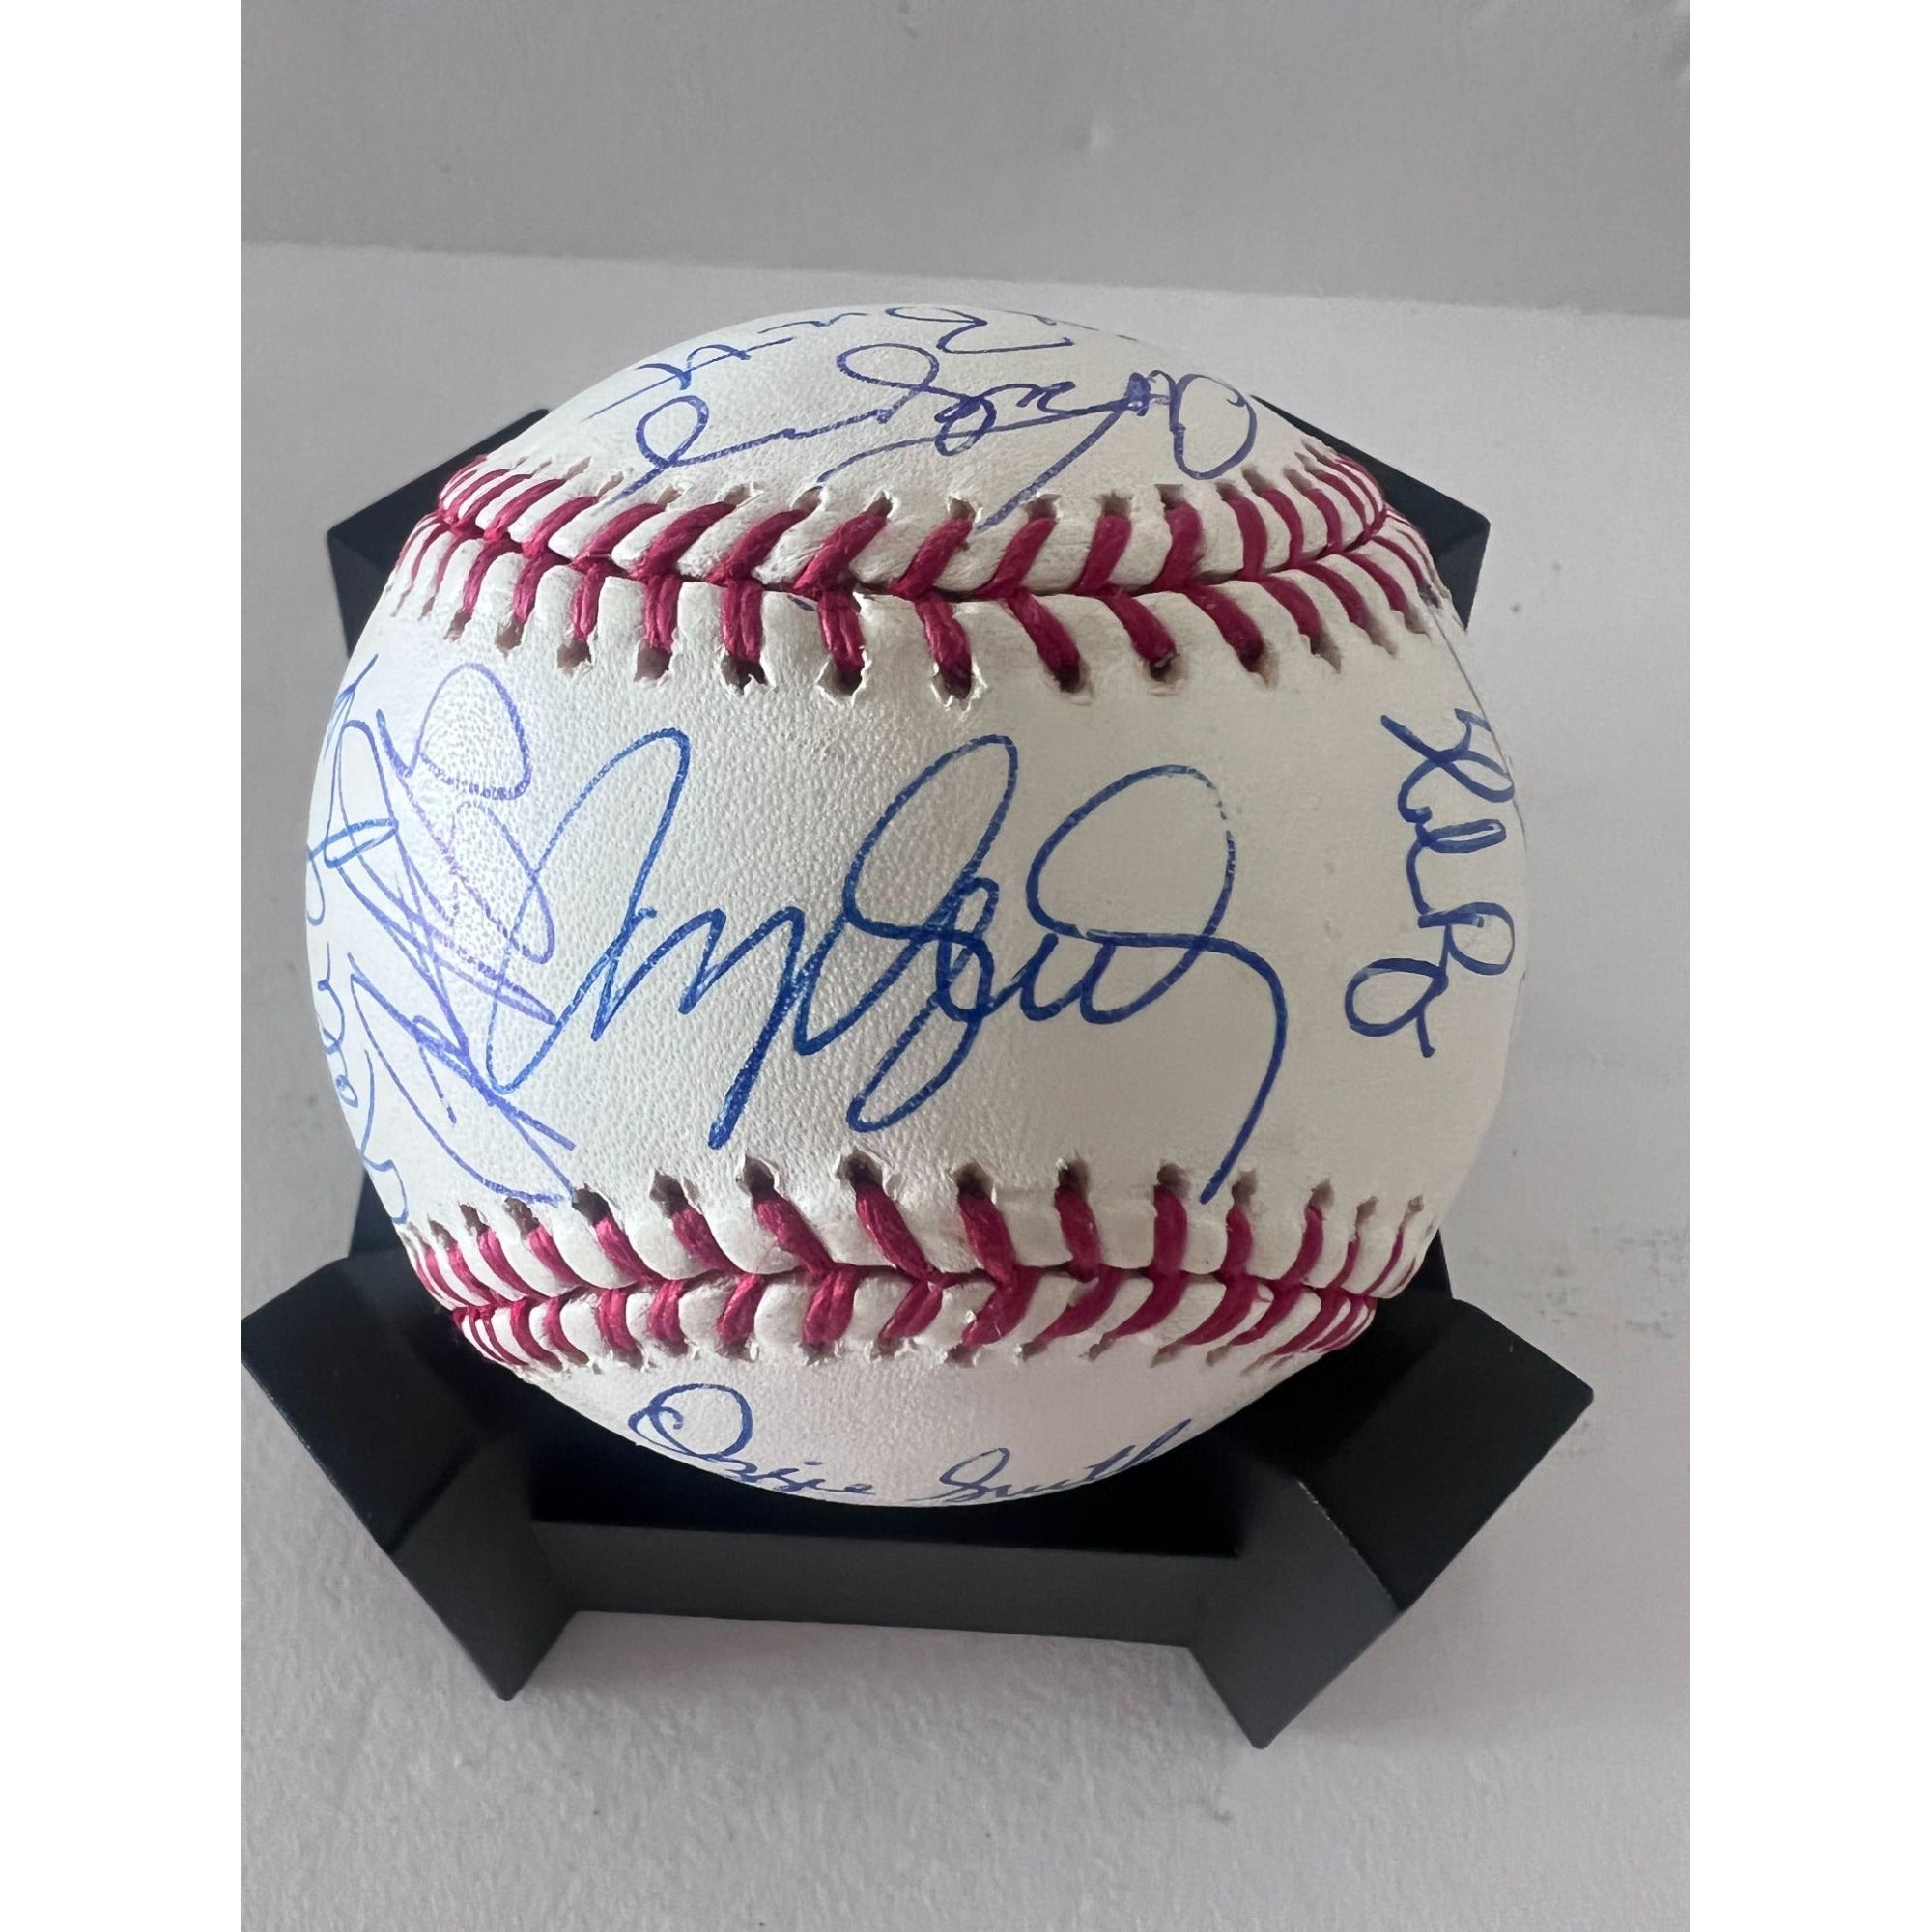 Nolan Ryan Sandy Koufax Tom Seaver Pete Rose Cal Ripken Jr Derek Jeter 24 MLB Hall of Famers Rawlings MLB baseball signed with proof